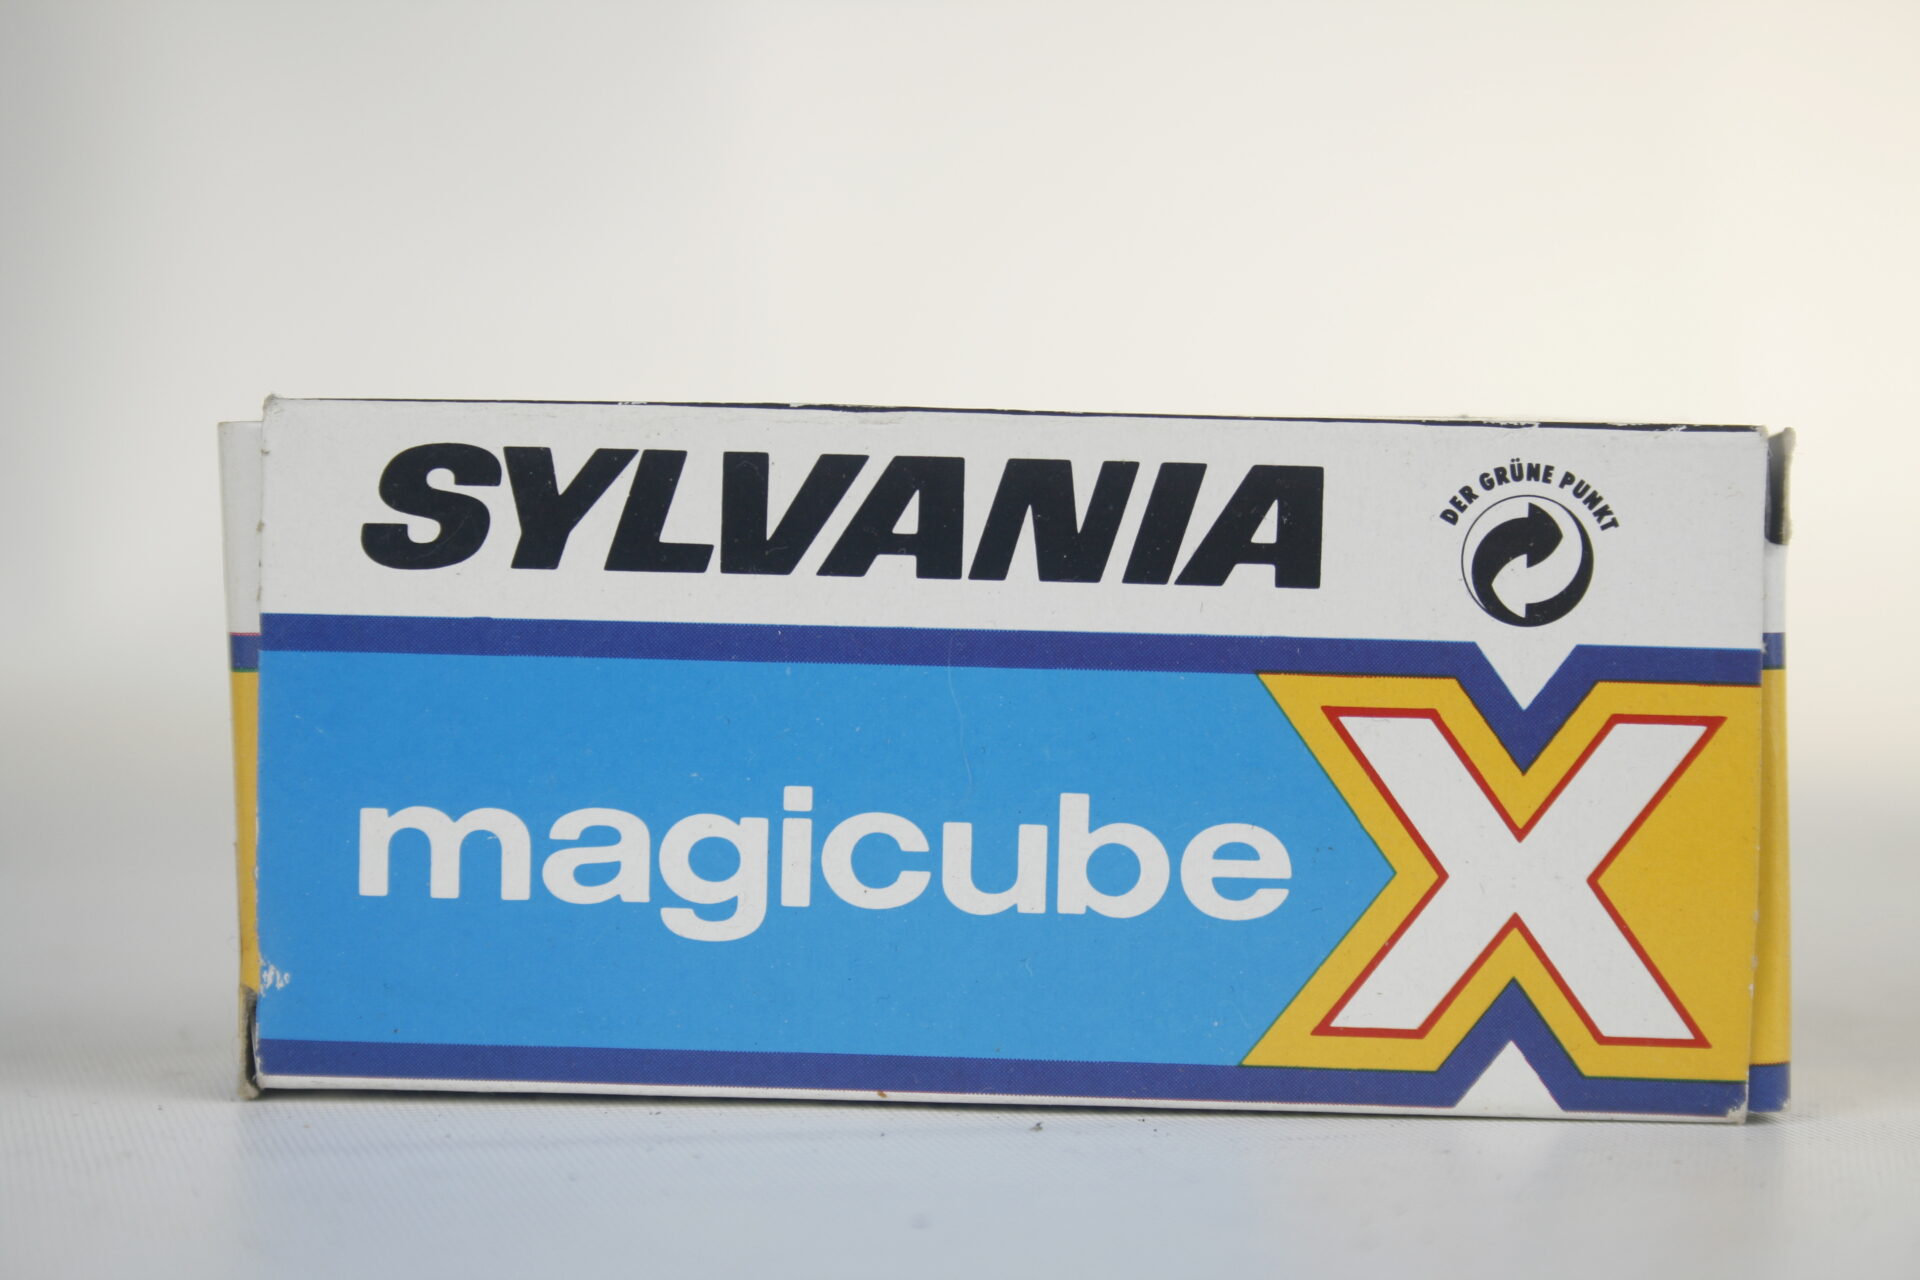 Sylvania Magiccube X